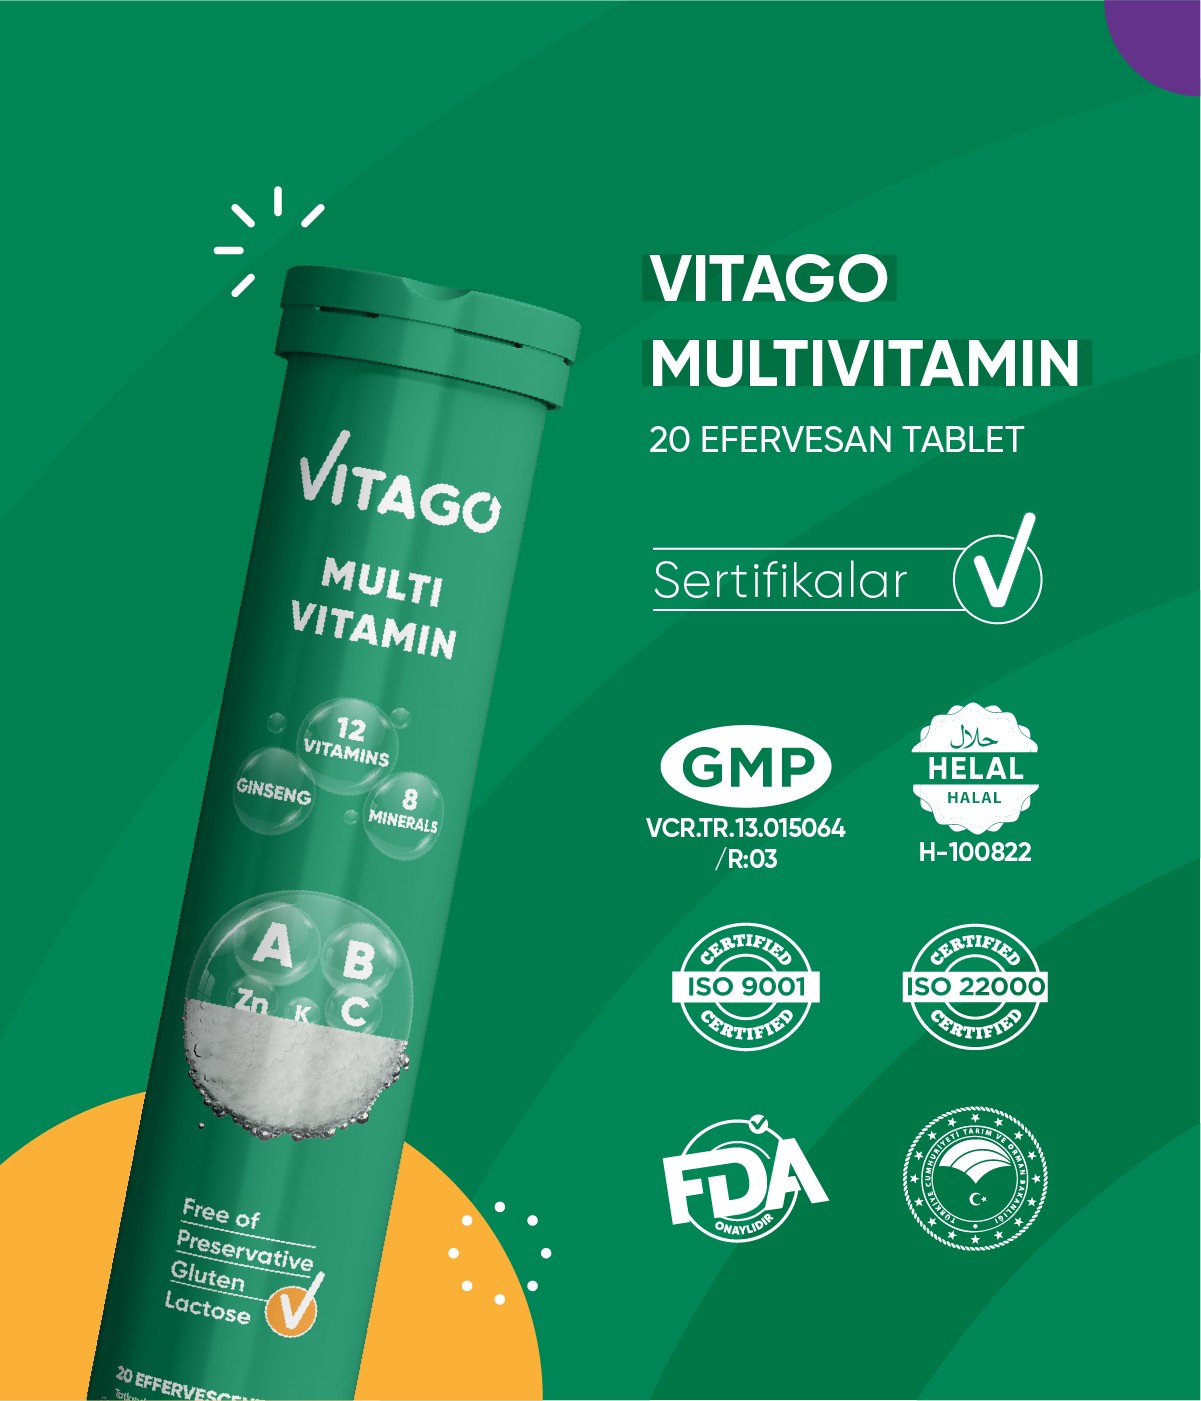 Vitago 20'li ProMultivit Multivitamin, Multimineral Efervesan Tablet Takviye Edici Gıda